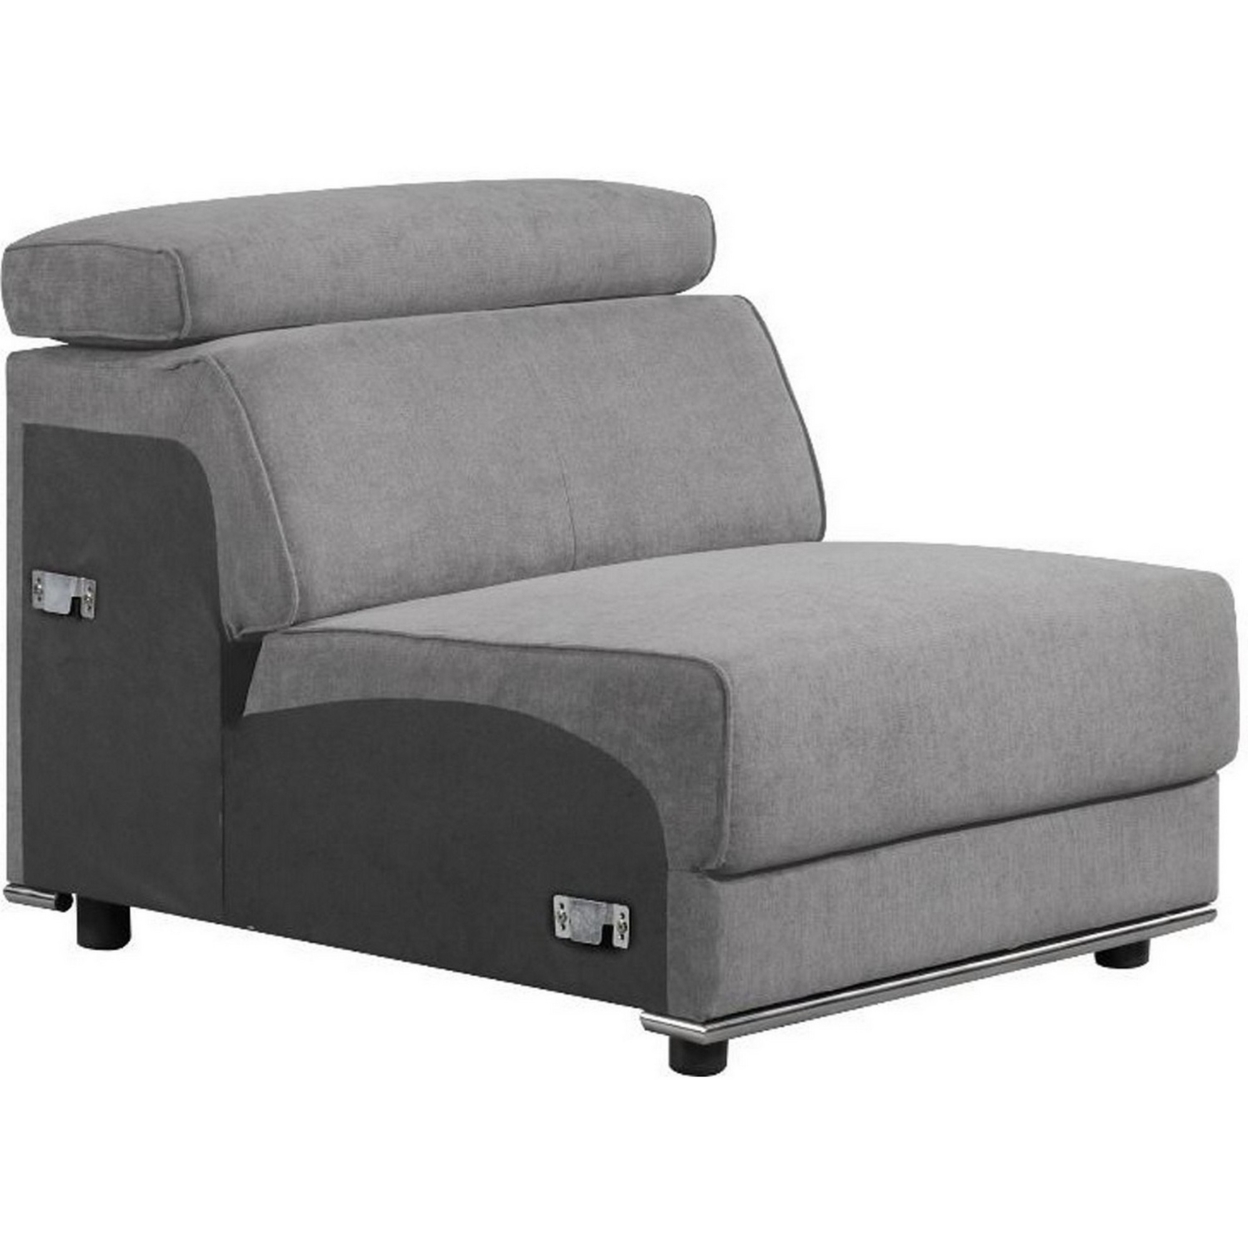 Fabric Upholstered Modular Armless Chair, Dark Gray- Saltoro Sherpi